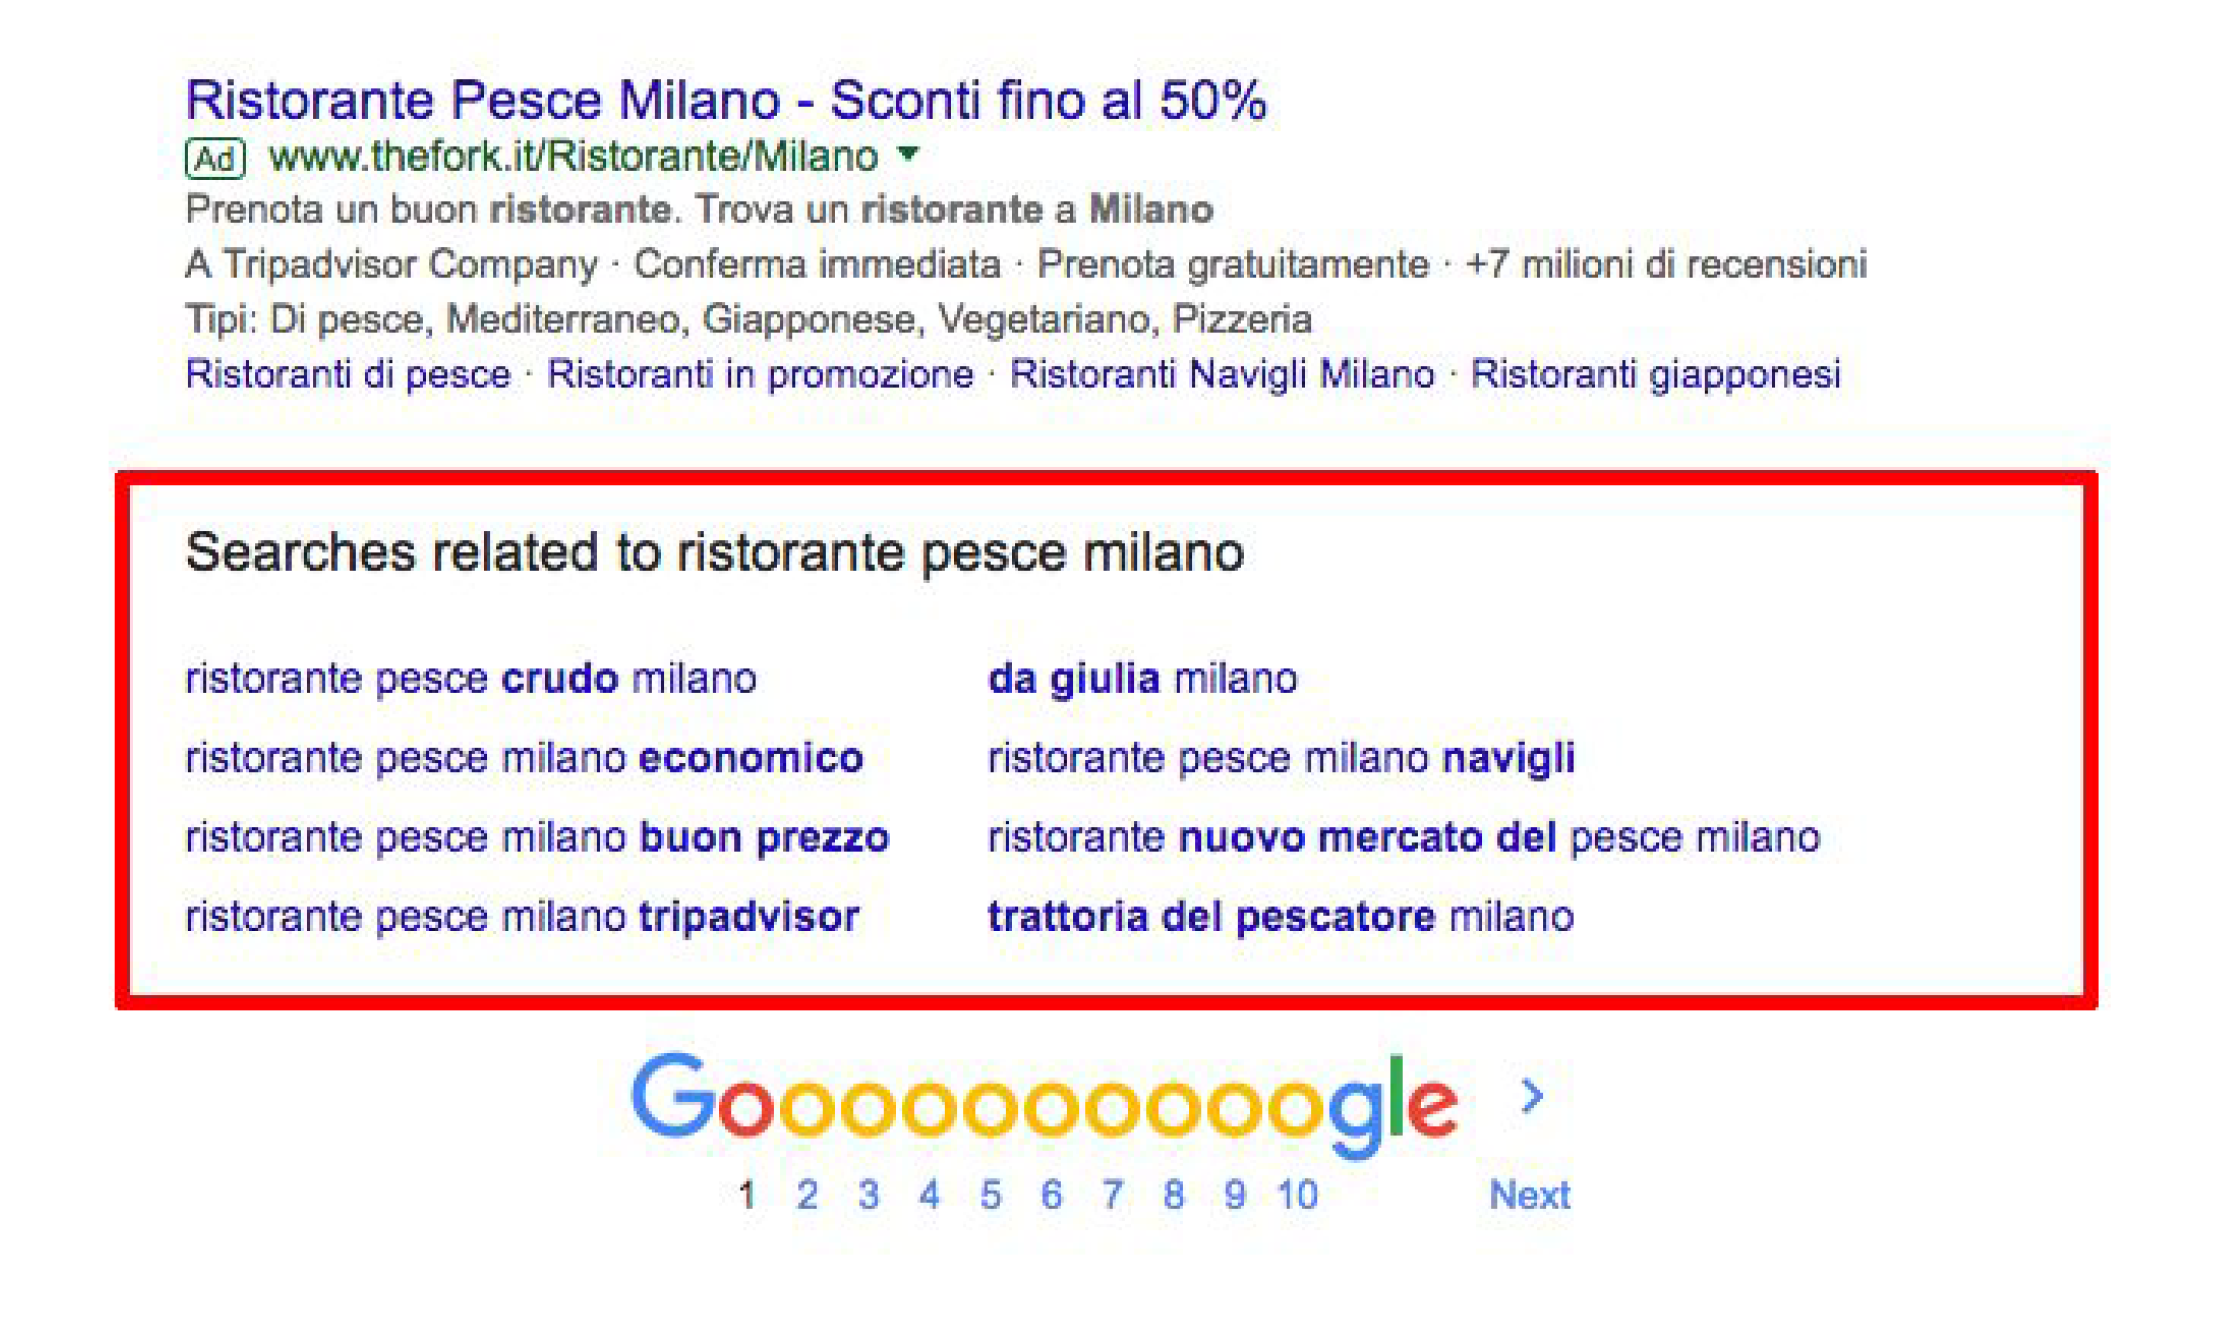 SERP- Ricerche correlate Google